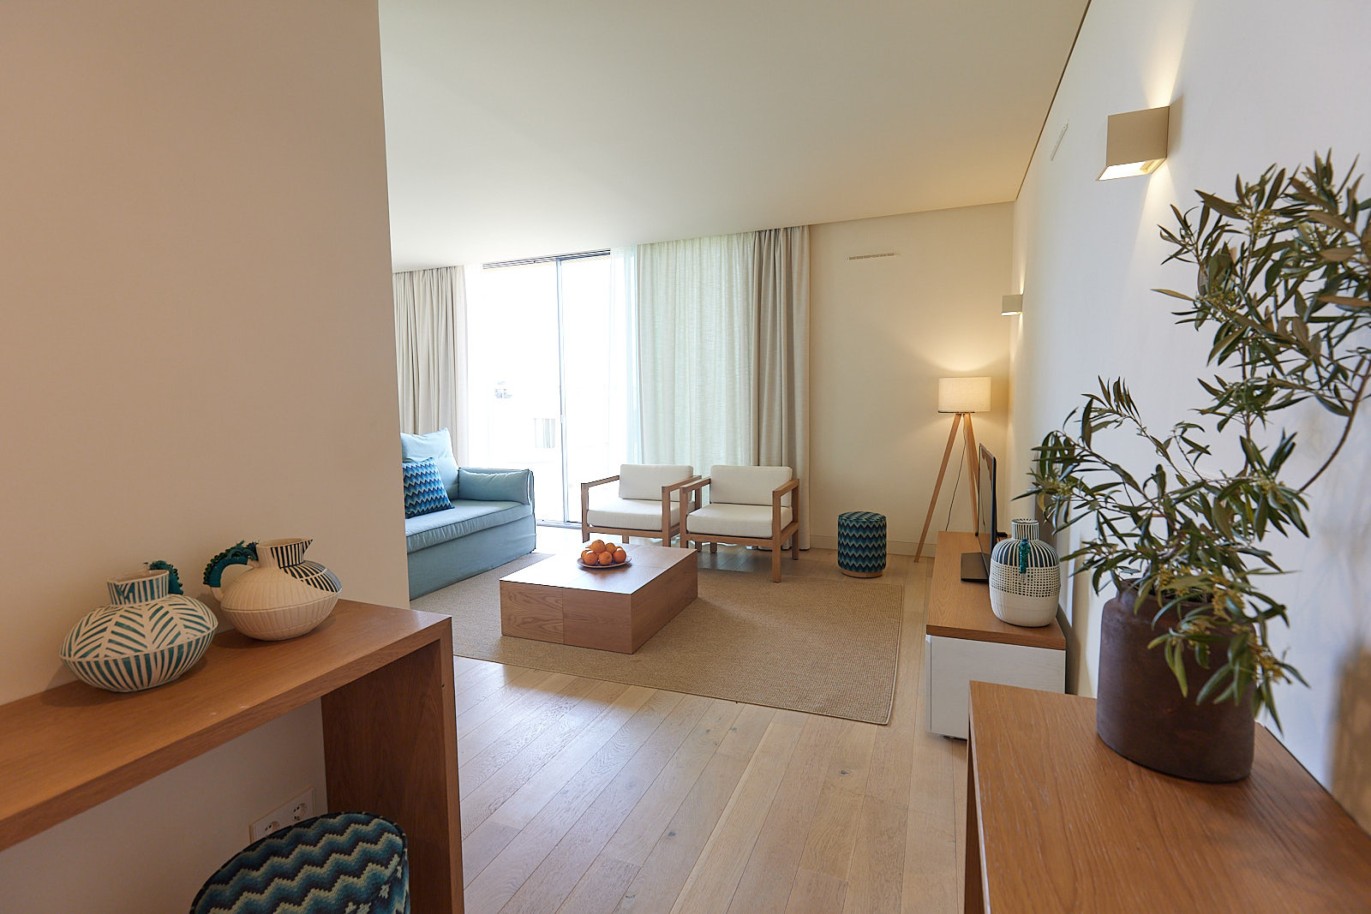 1 bedroom apartment in resort, for sale in Porches, Algarve_228991